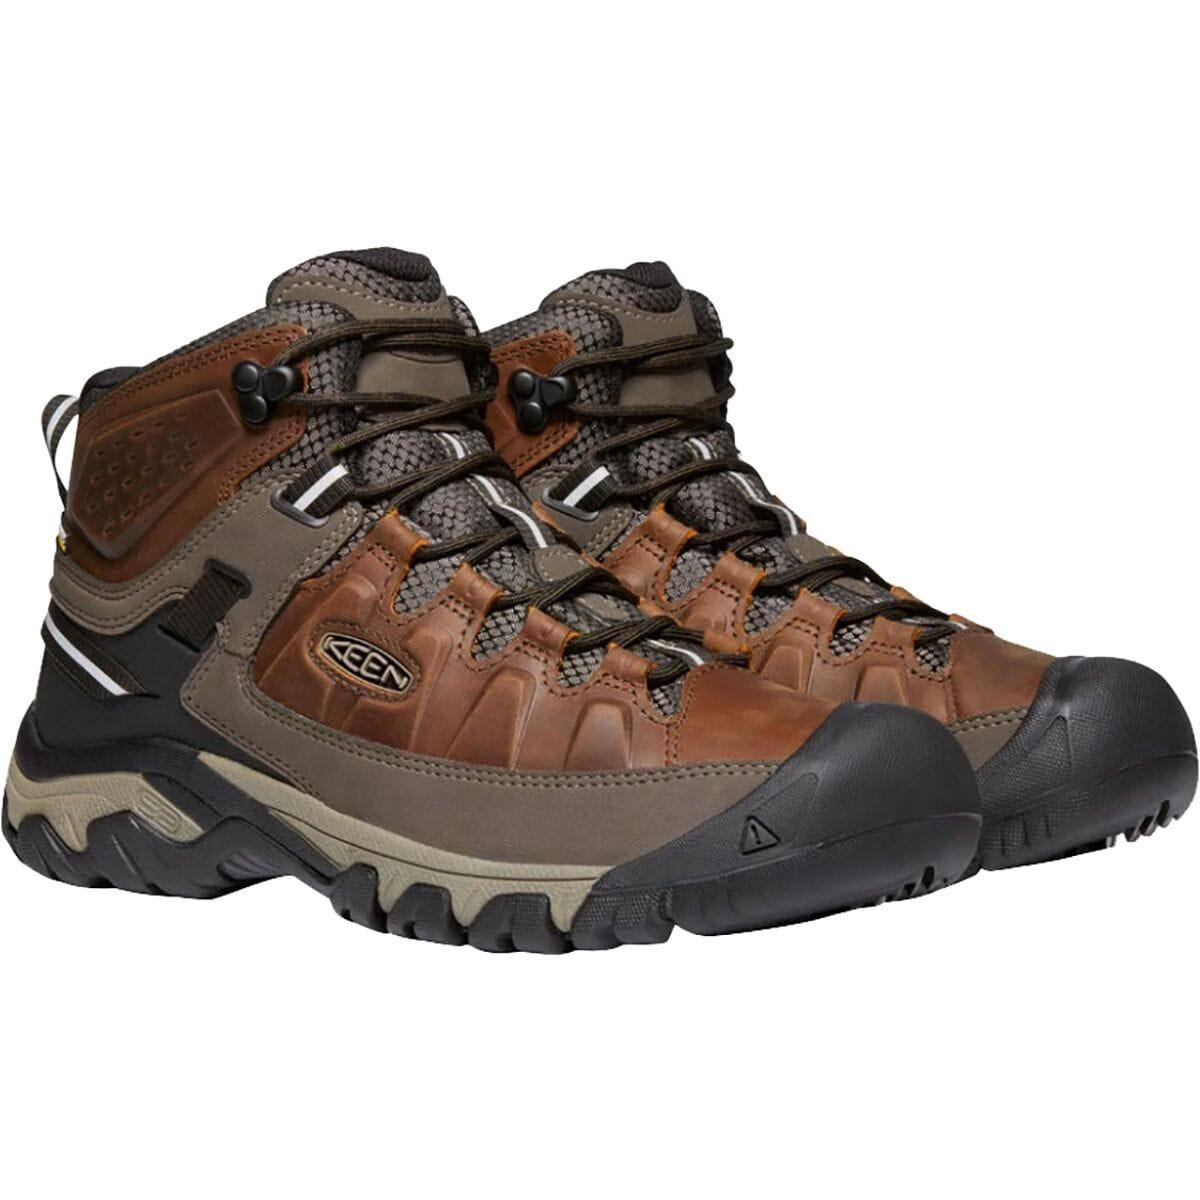 Keen Targhee III Mid Leather Waterproof Hiking Boot - Men's